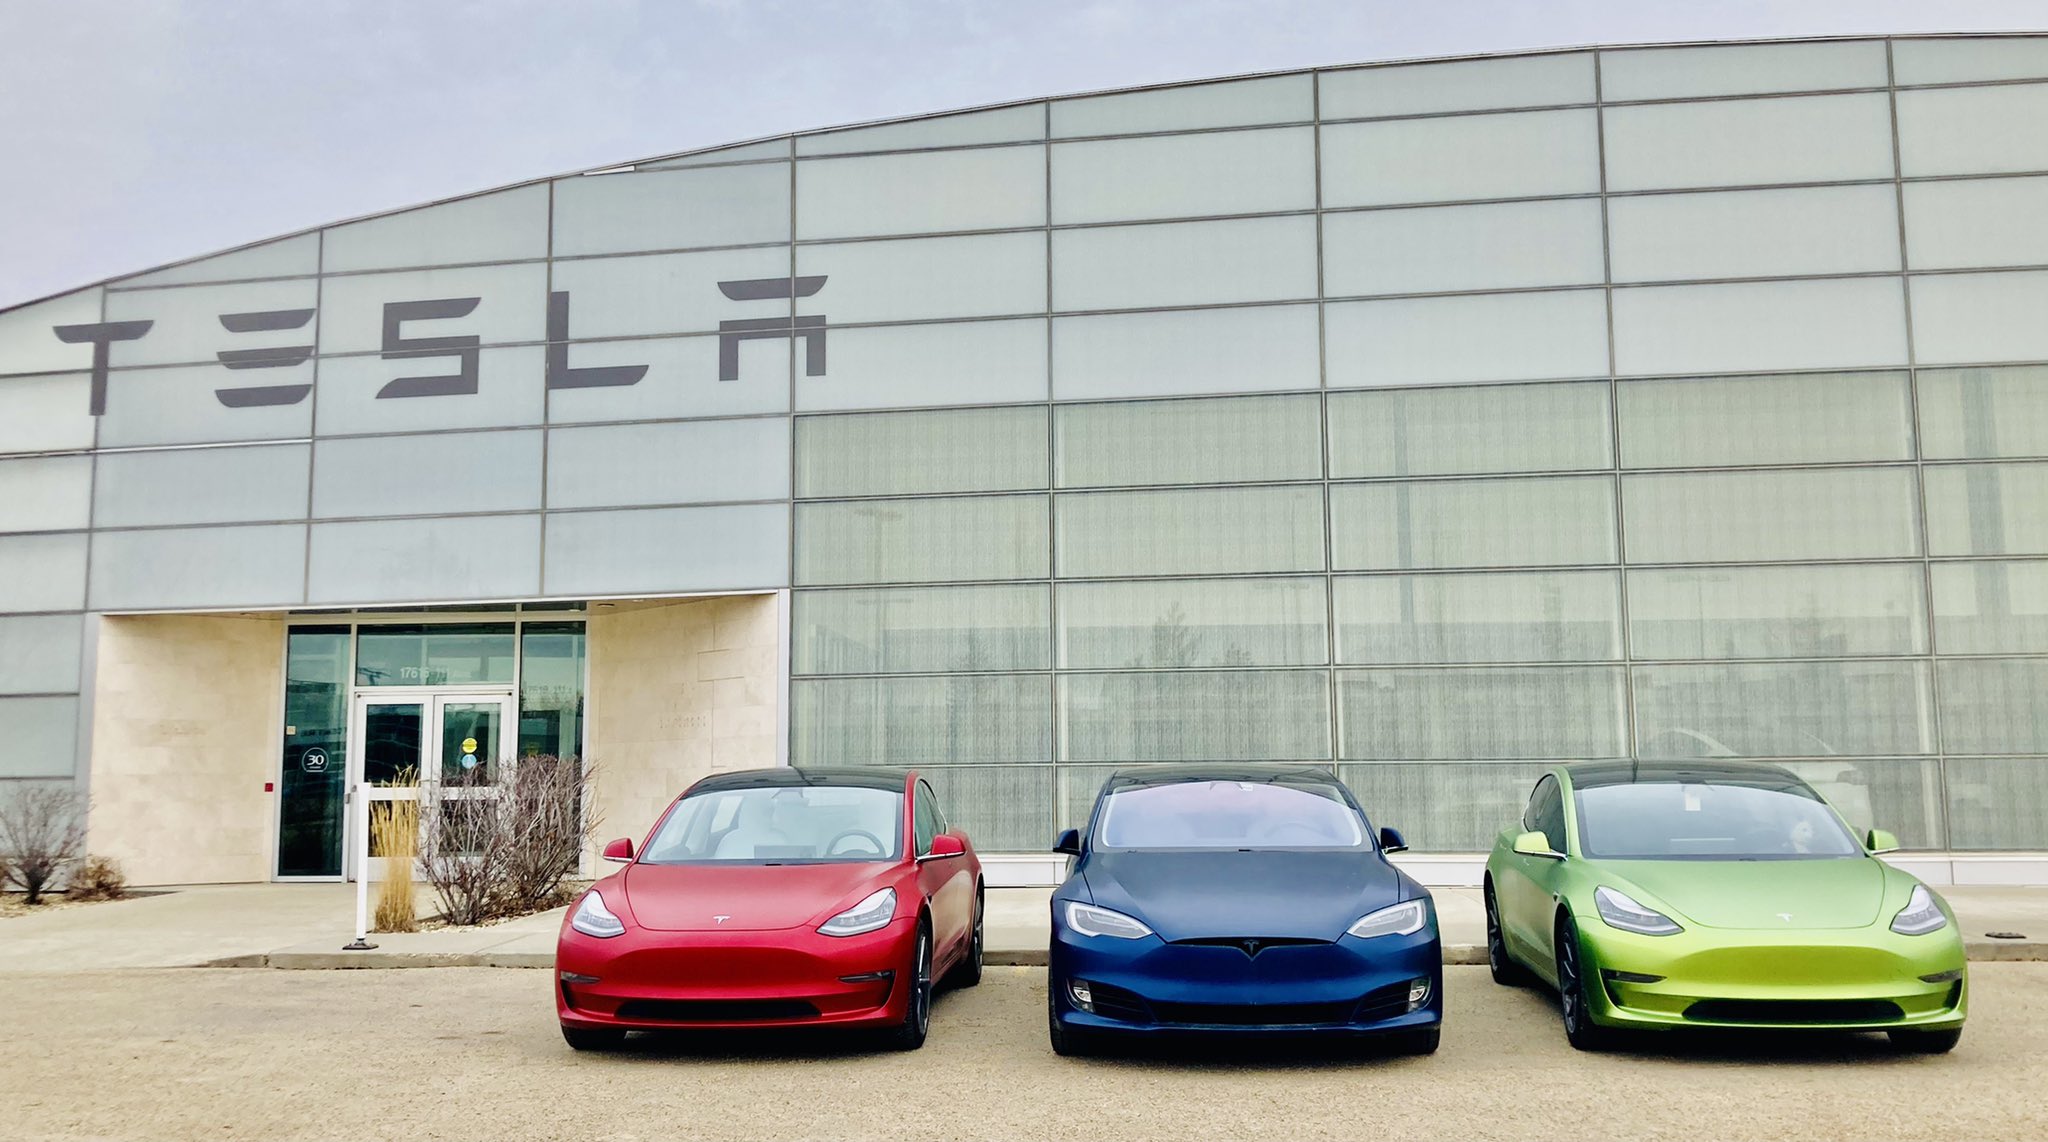 Tesla Edmonton now open for deliveries, sales & service coming soon